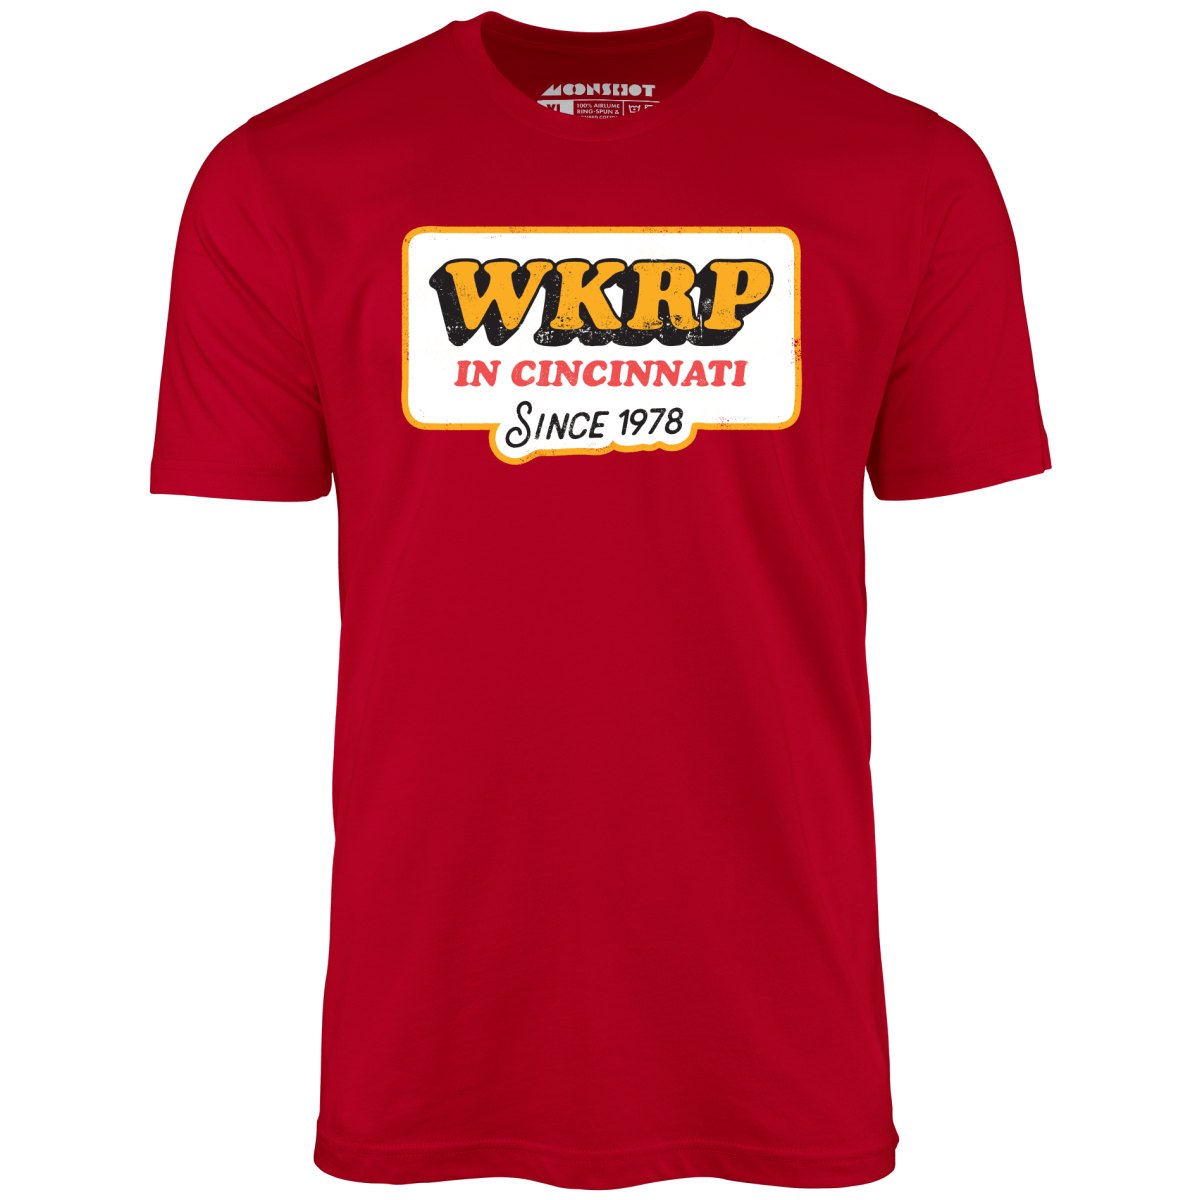 WKRP in Cincinnati - Unisex T-Shirt